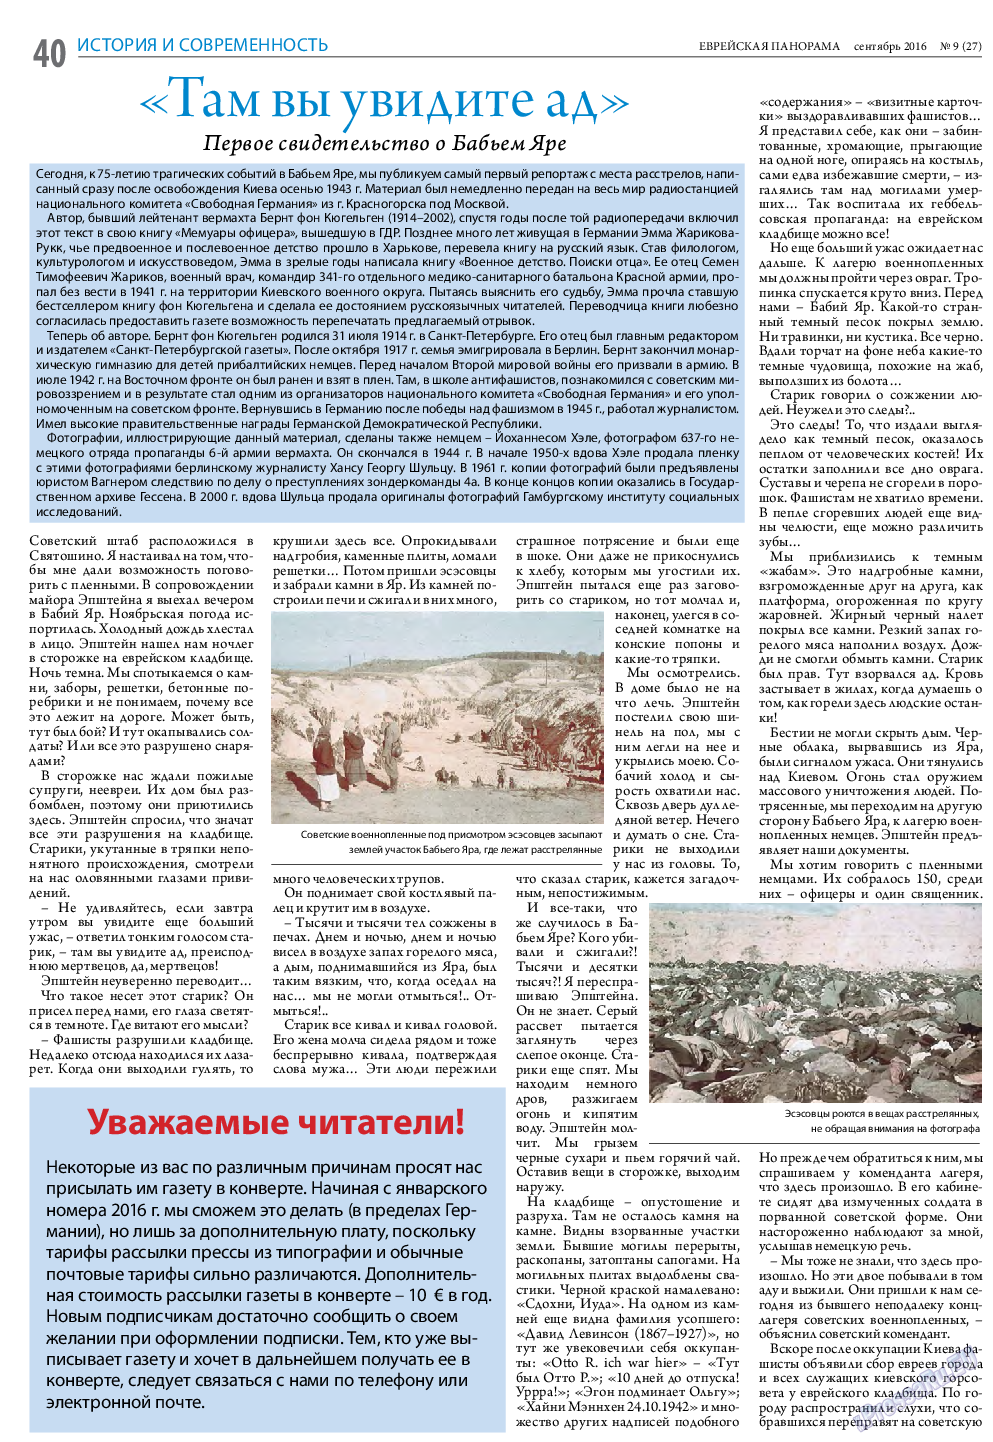 Еврейская панорама, газета. 2016 №9 стр.40